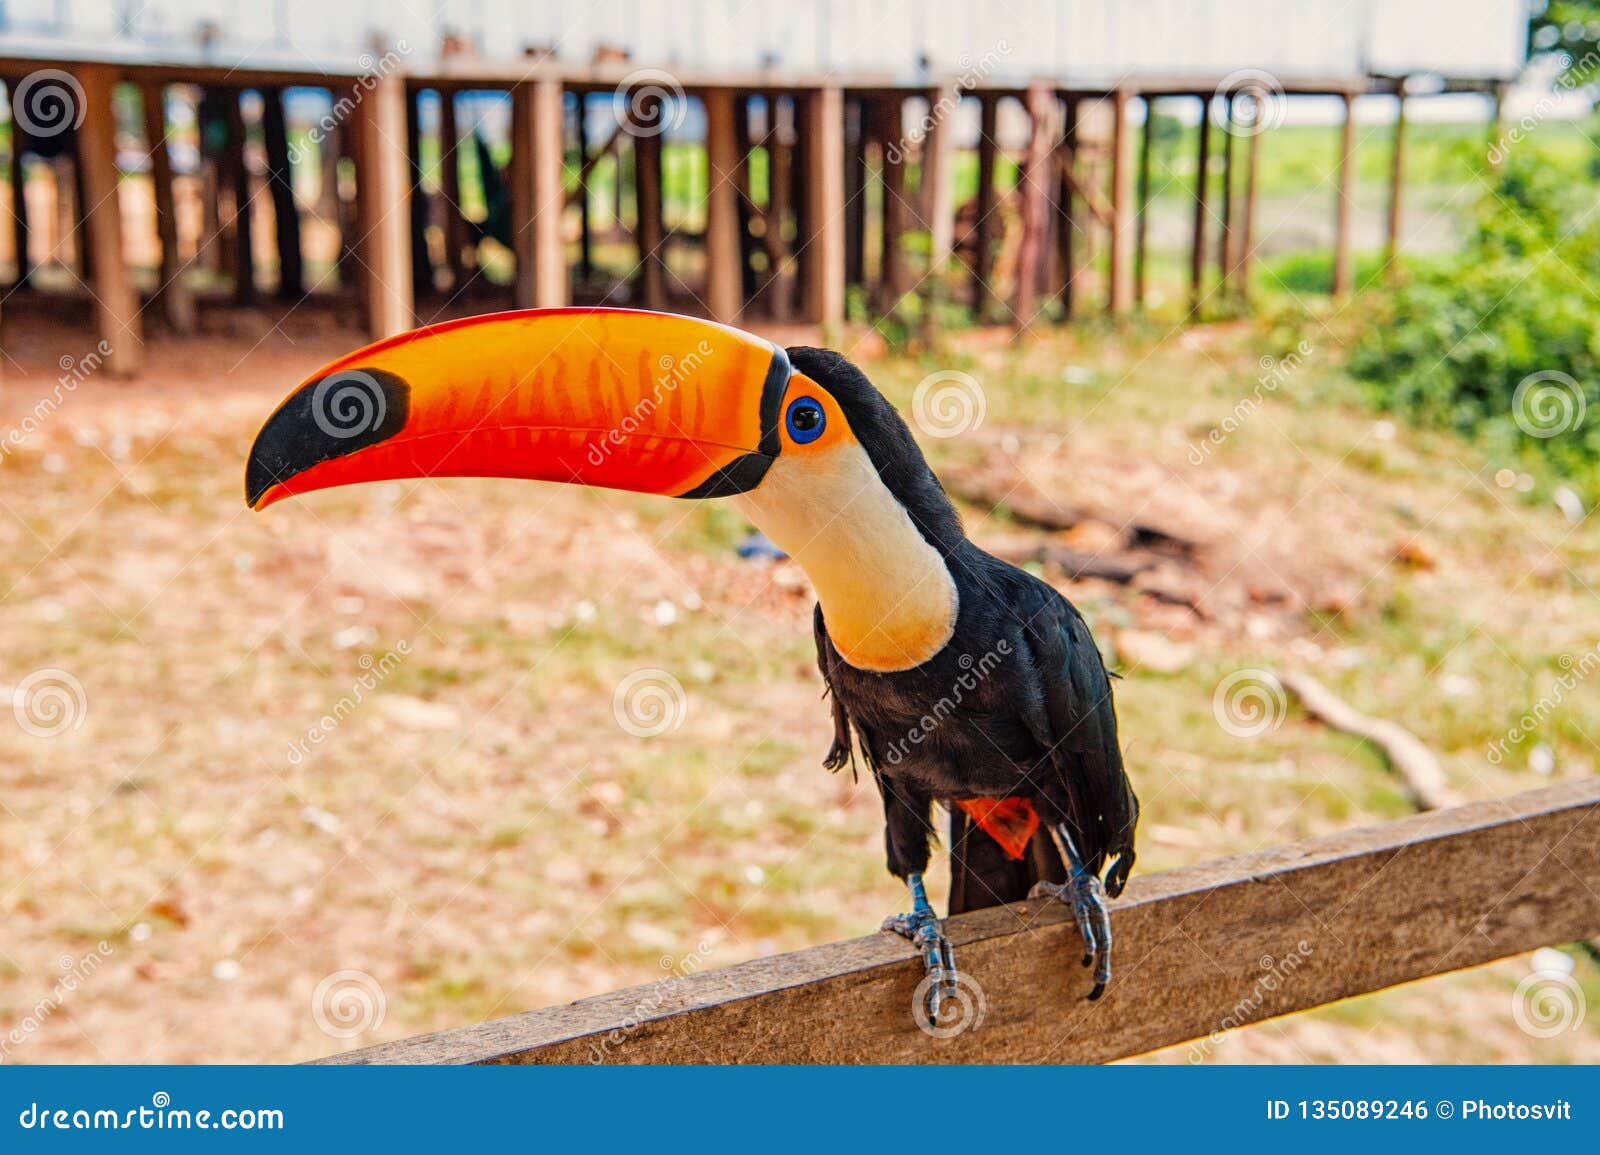 toucan bird on nature in boca de valeria, amazon river, brazil. tropical bird with orange beak on perch. animal, fauna